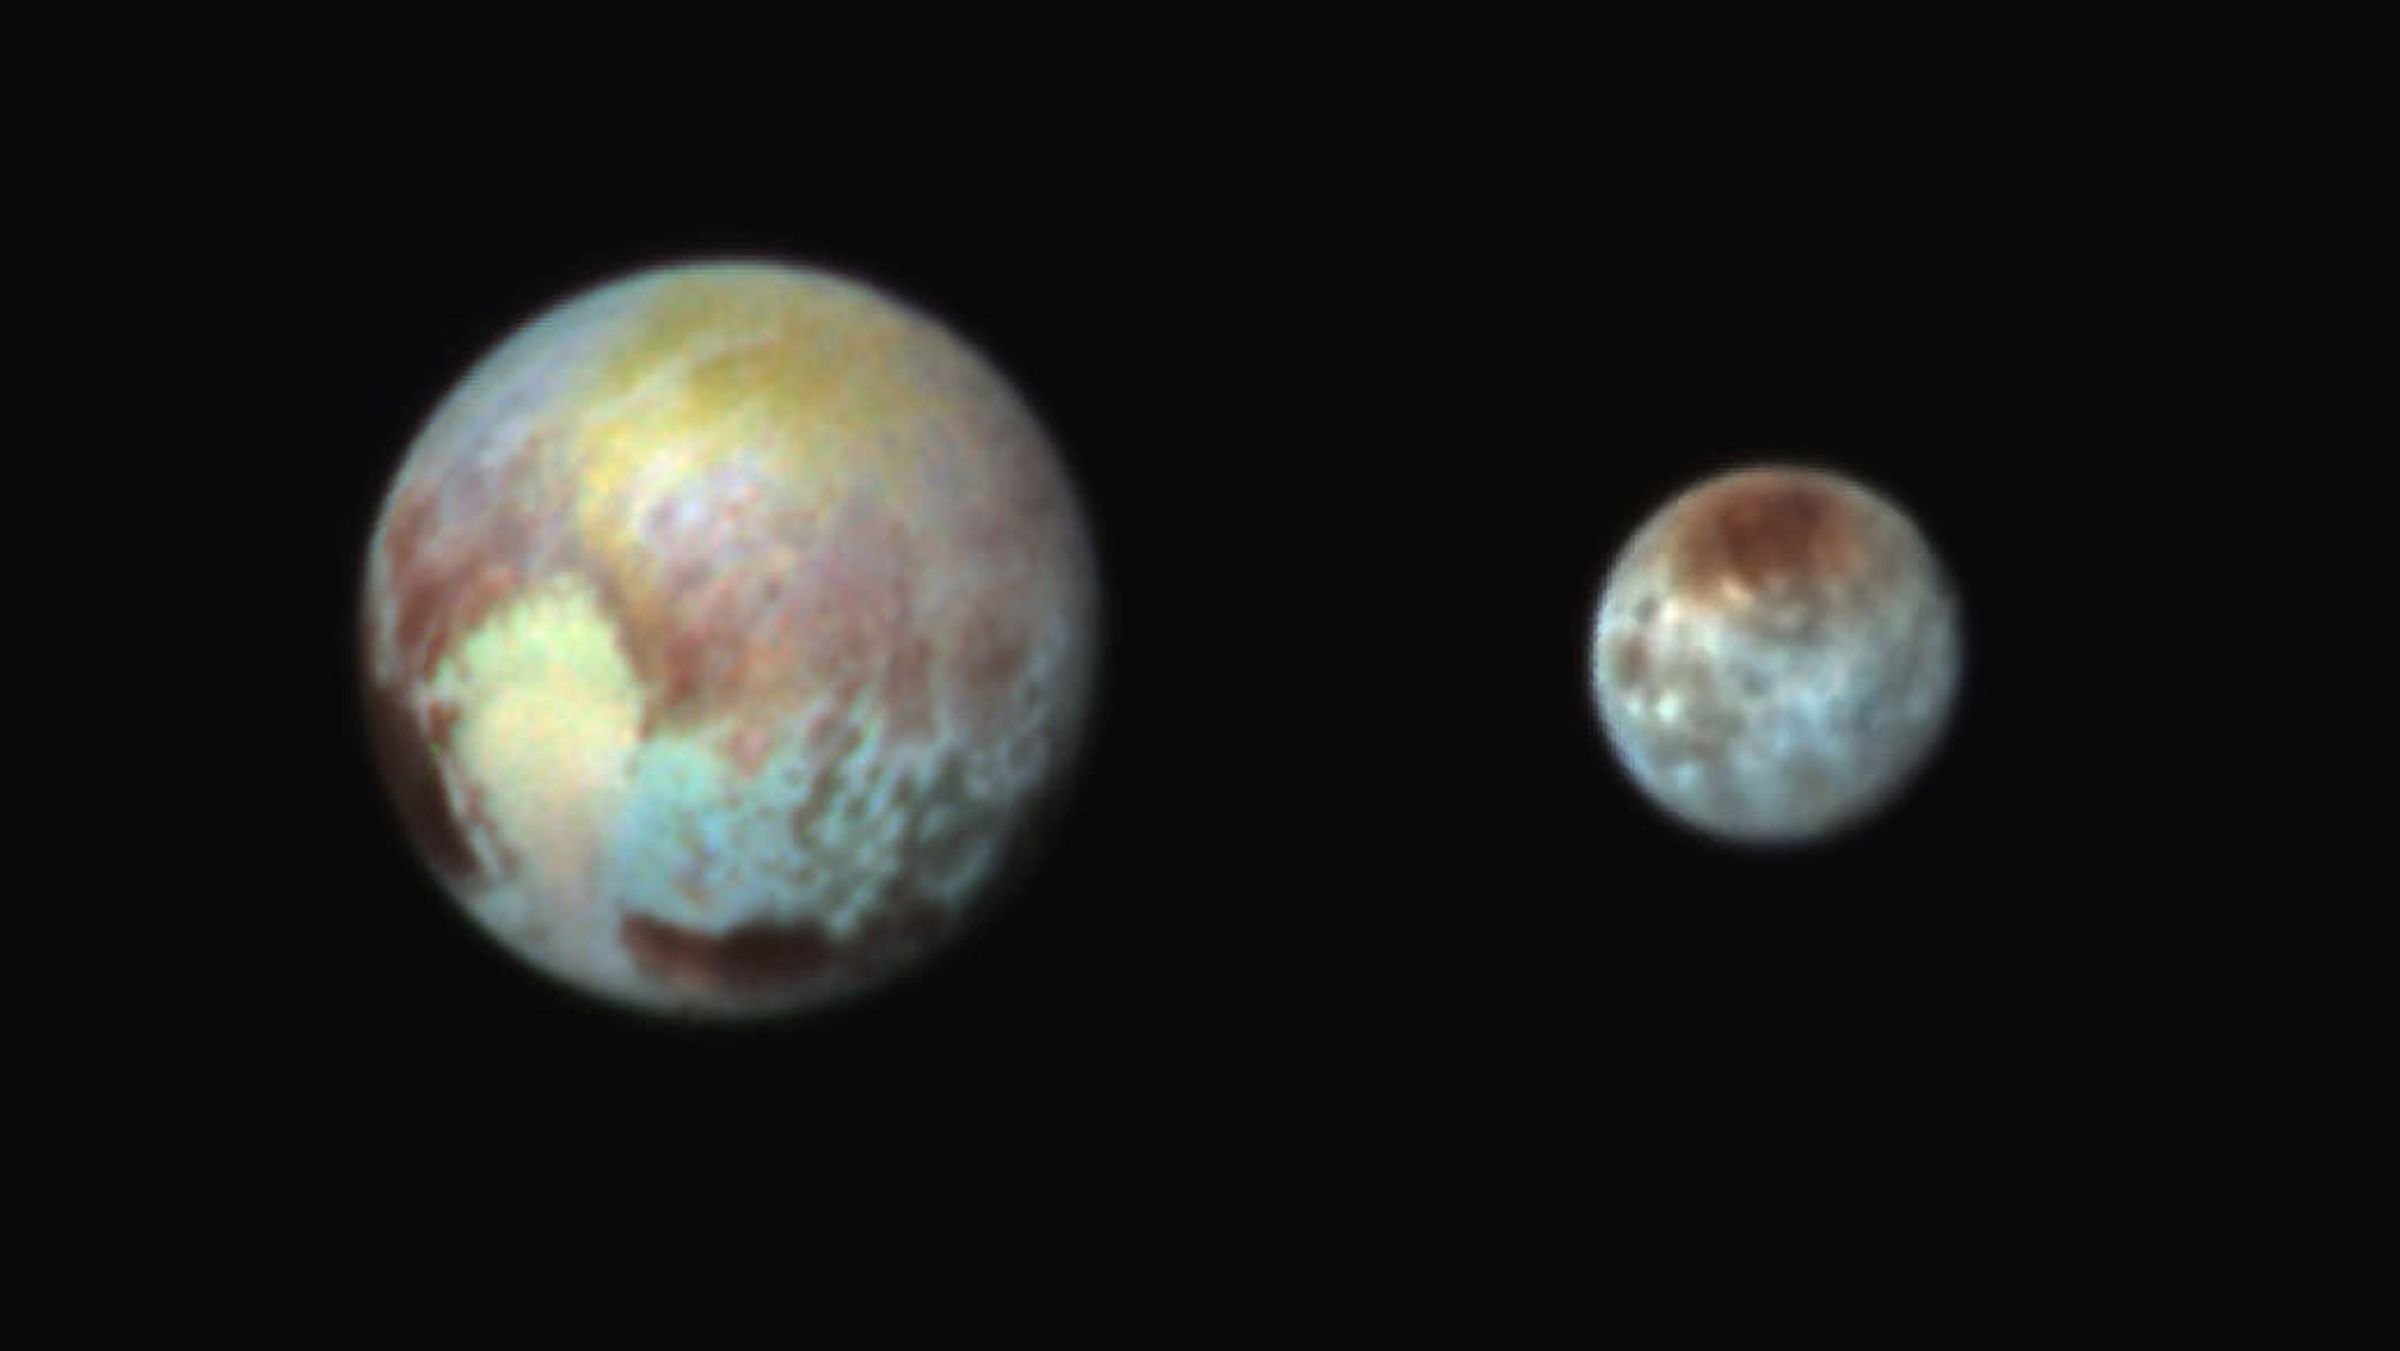 Pluto Charon false color